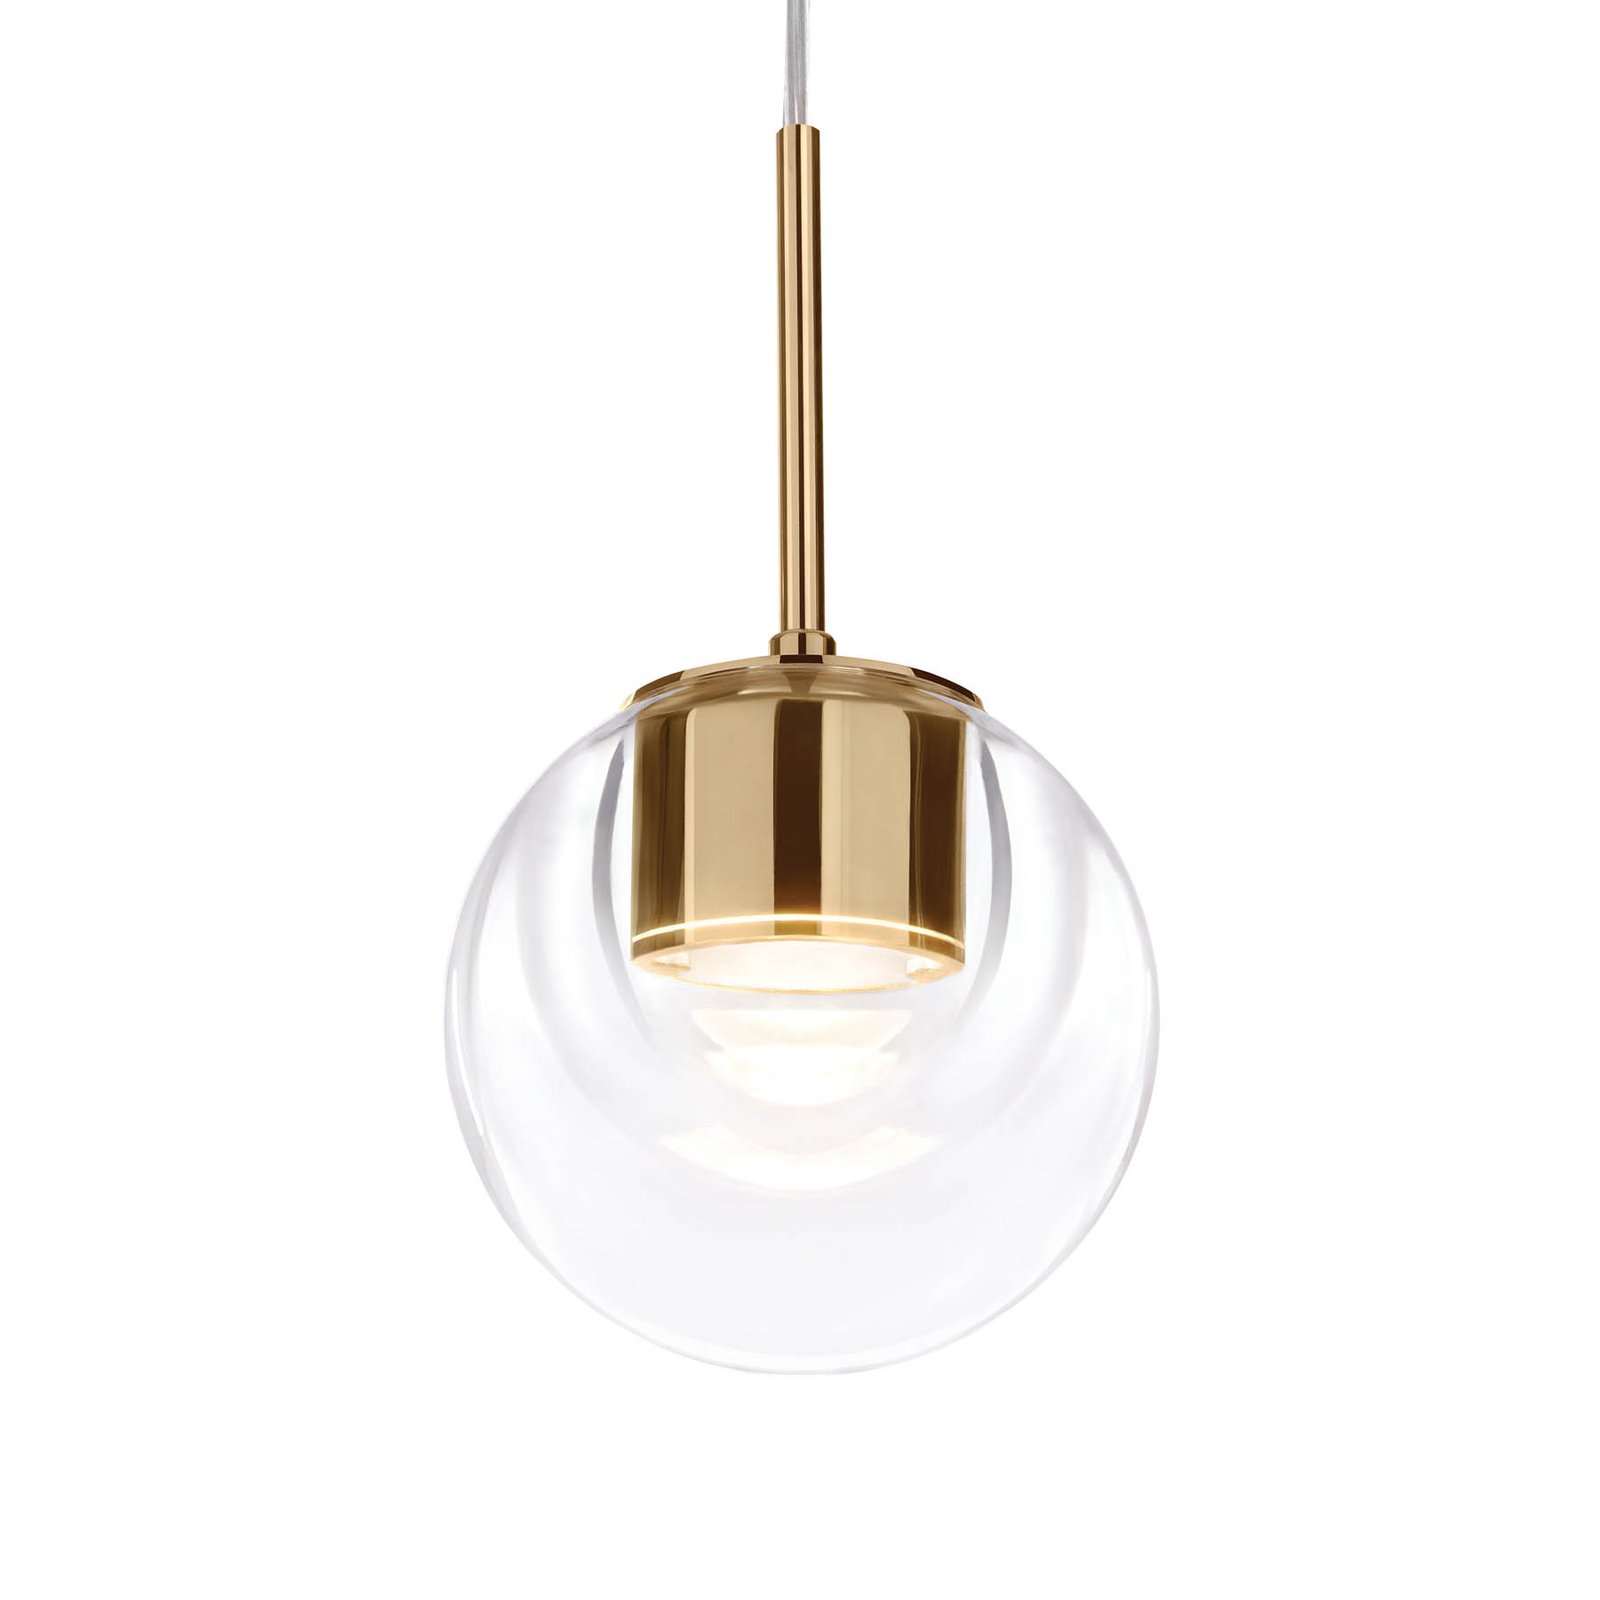 Kundalini Dew LED pendant light, one-bulb brass